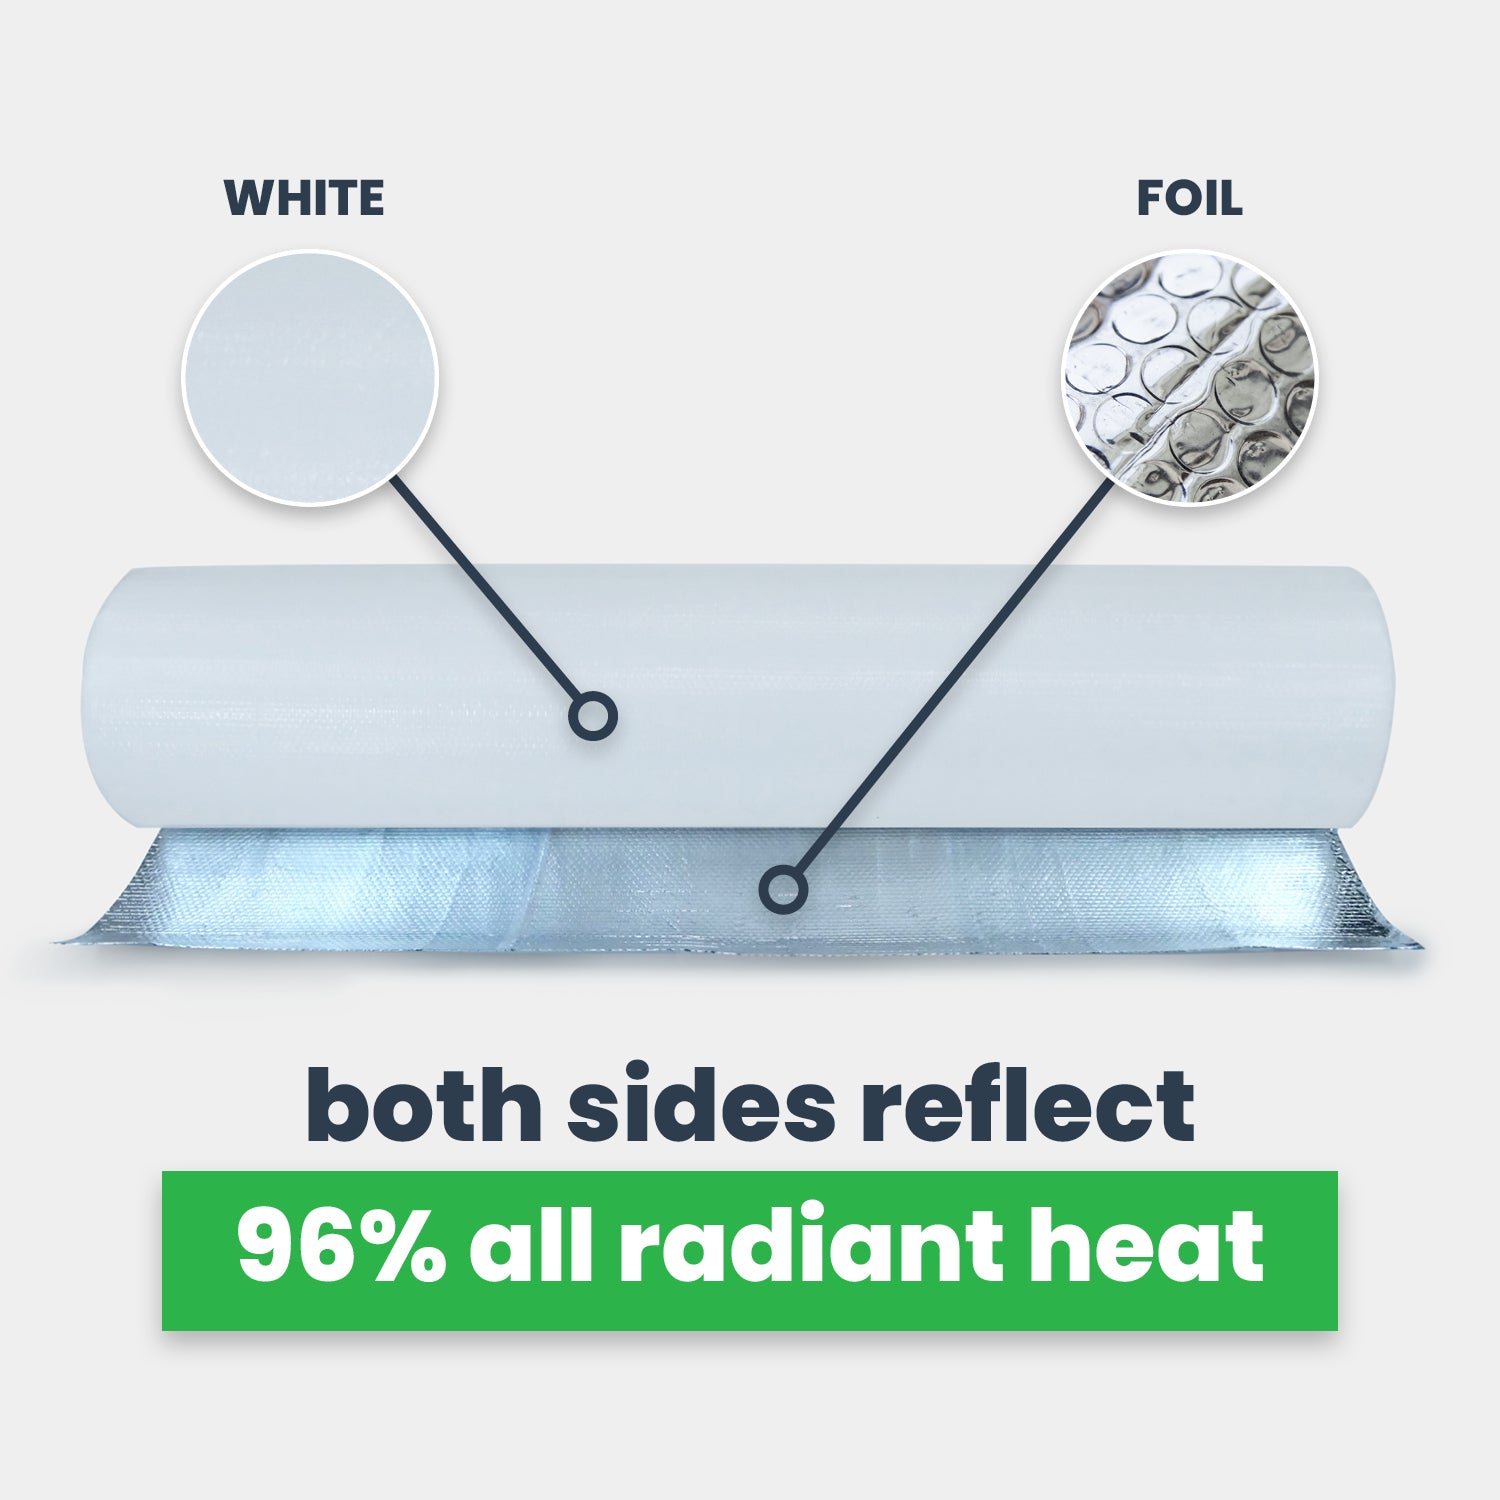 single bubble white foil, both sides reflect 96% radiant heat